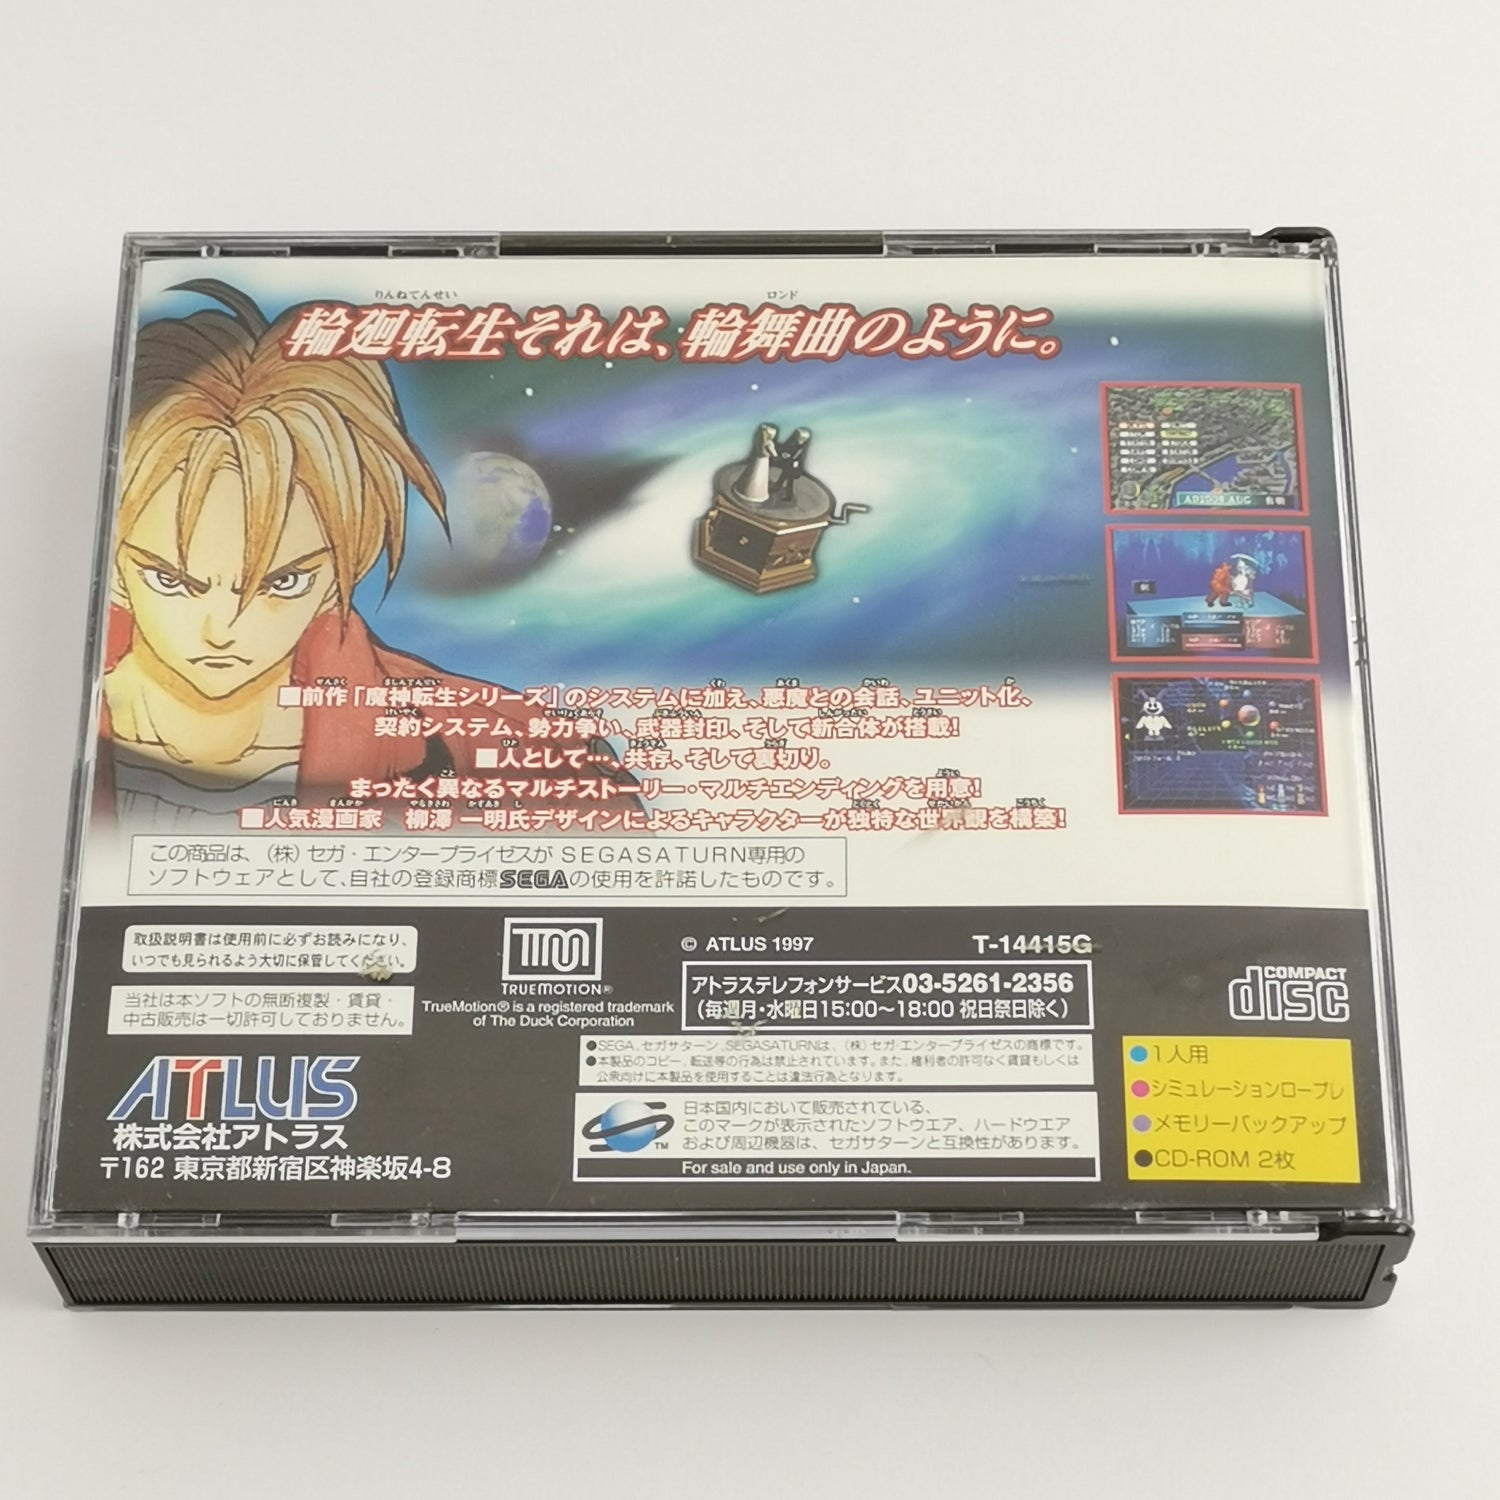 Sega Saturn Game: Ronde | NTSC-J JAPAN version - original packaging